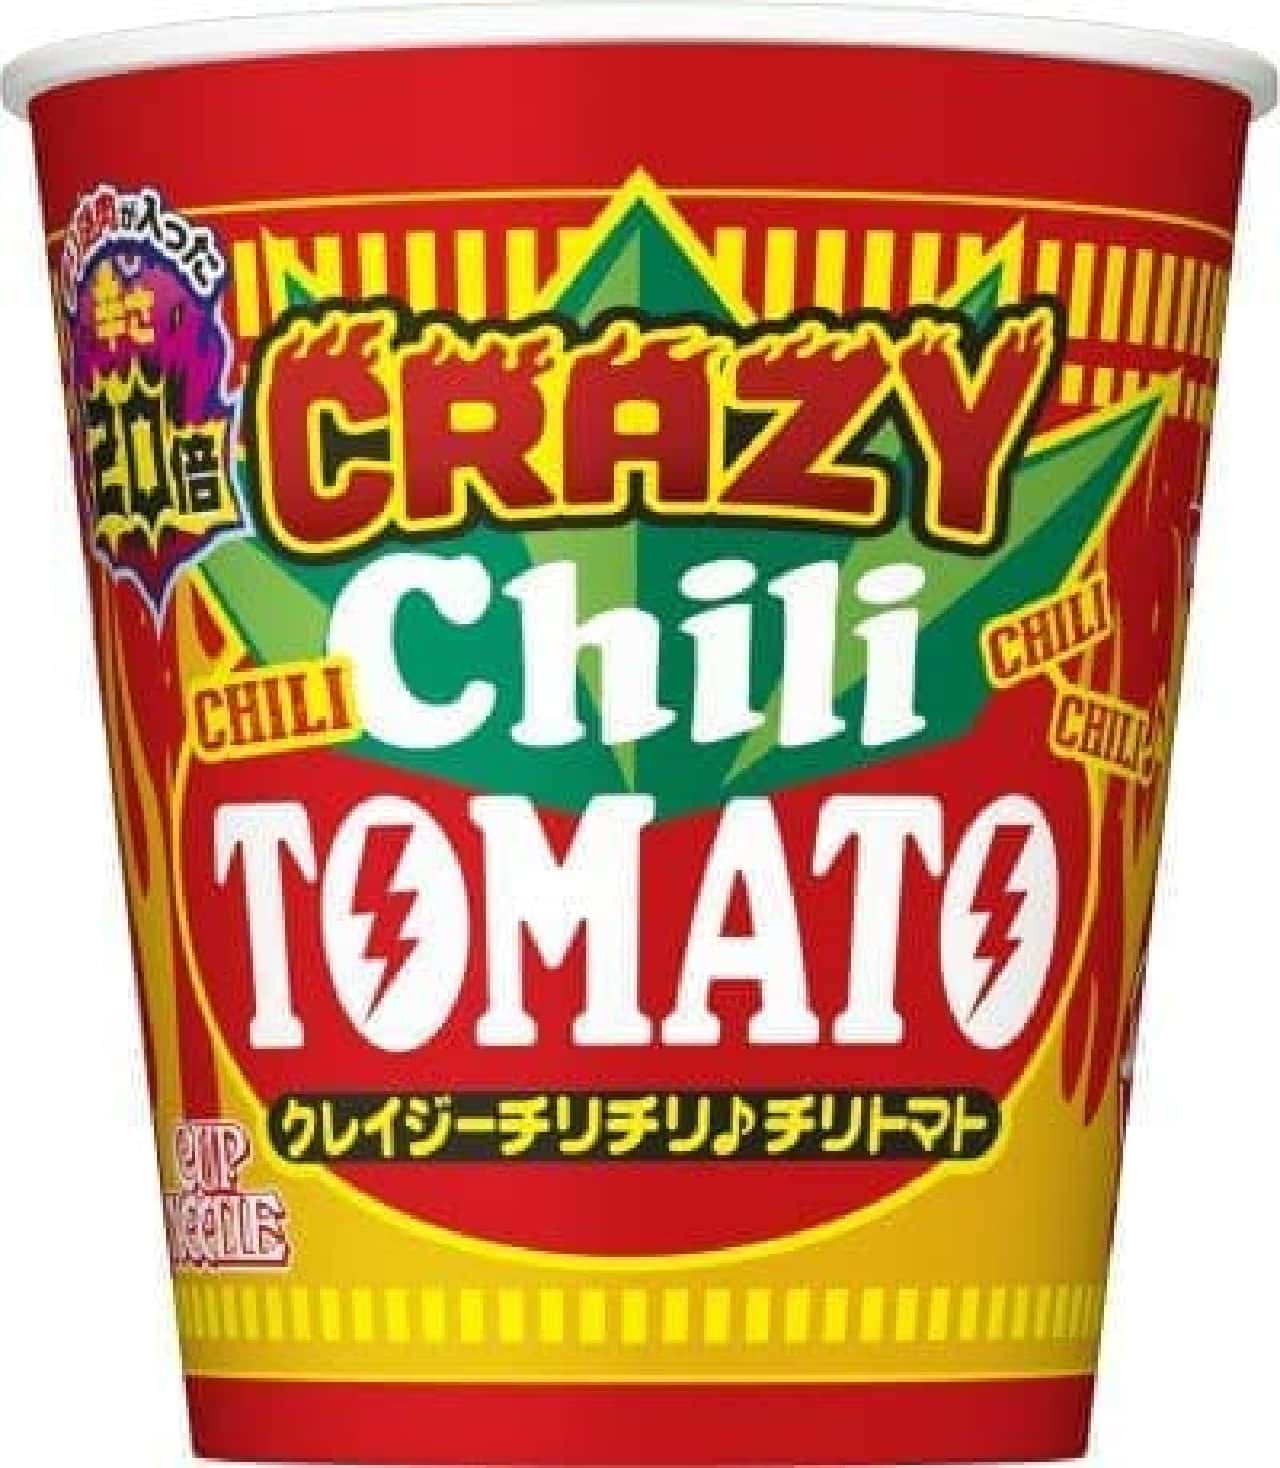 Nissin Foods "Cup Noodle Crazy Chili Chili ♪ Chili Tomato Big"